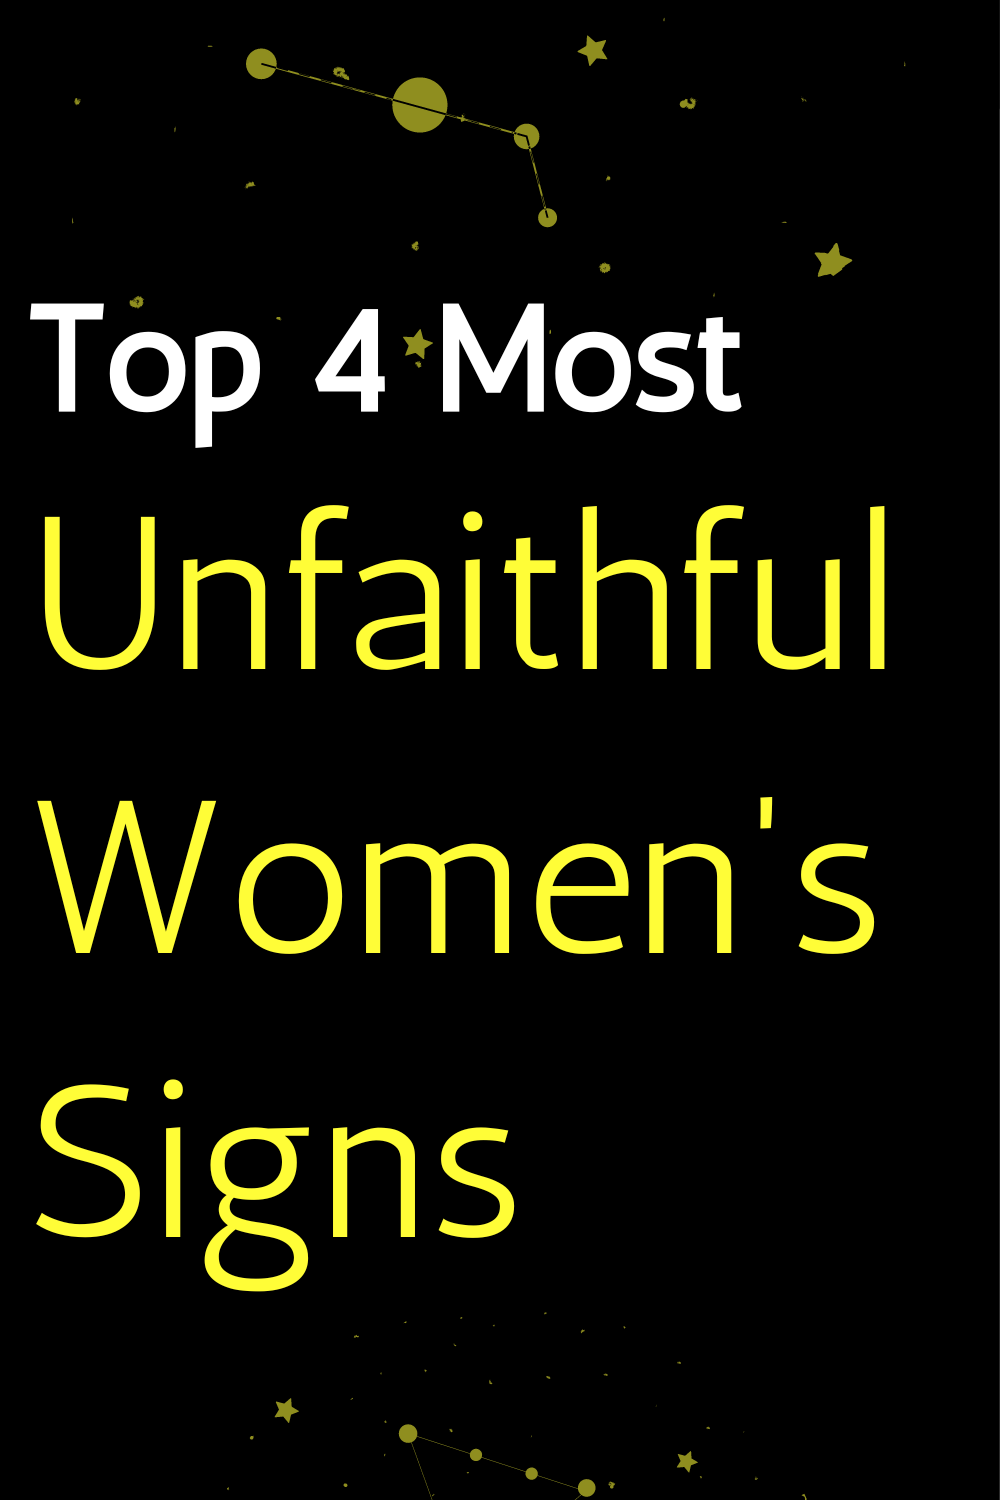 Top 4 Most Unfaithful Women's Signs